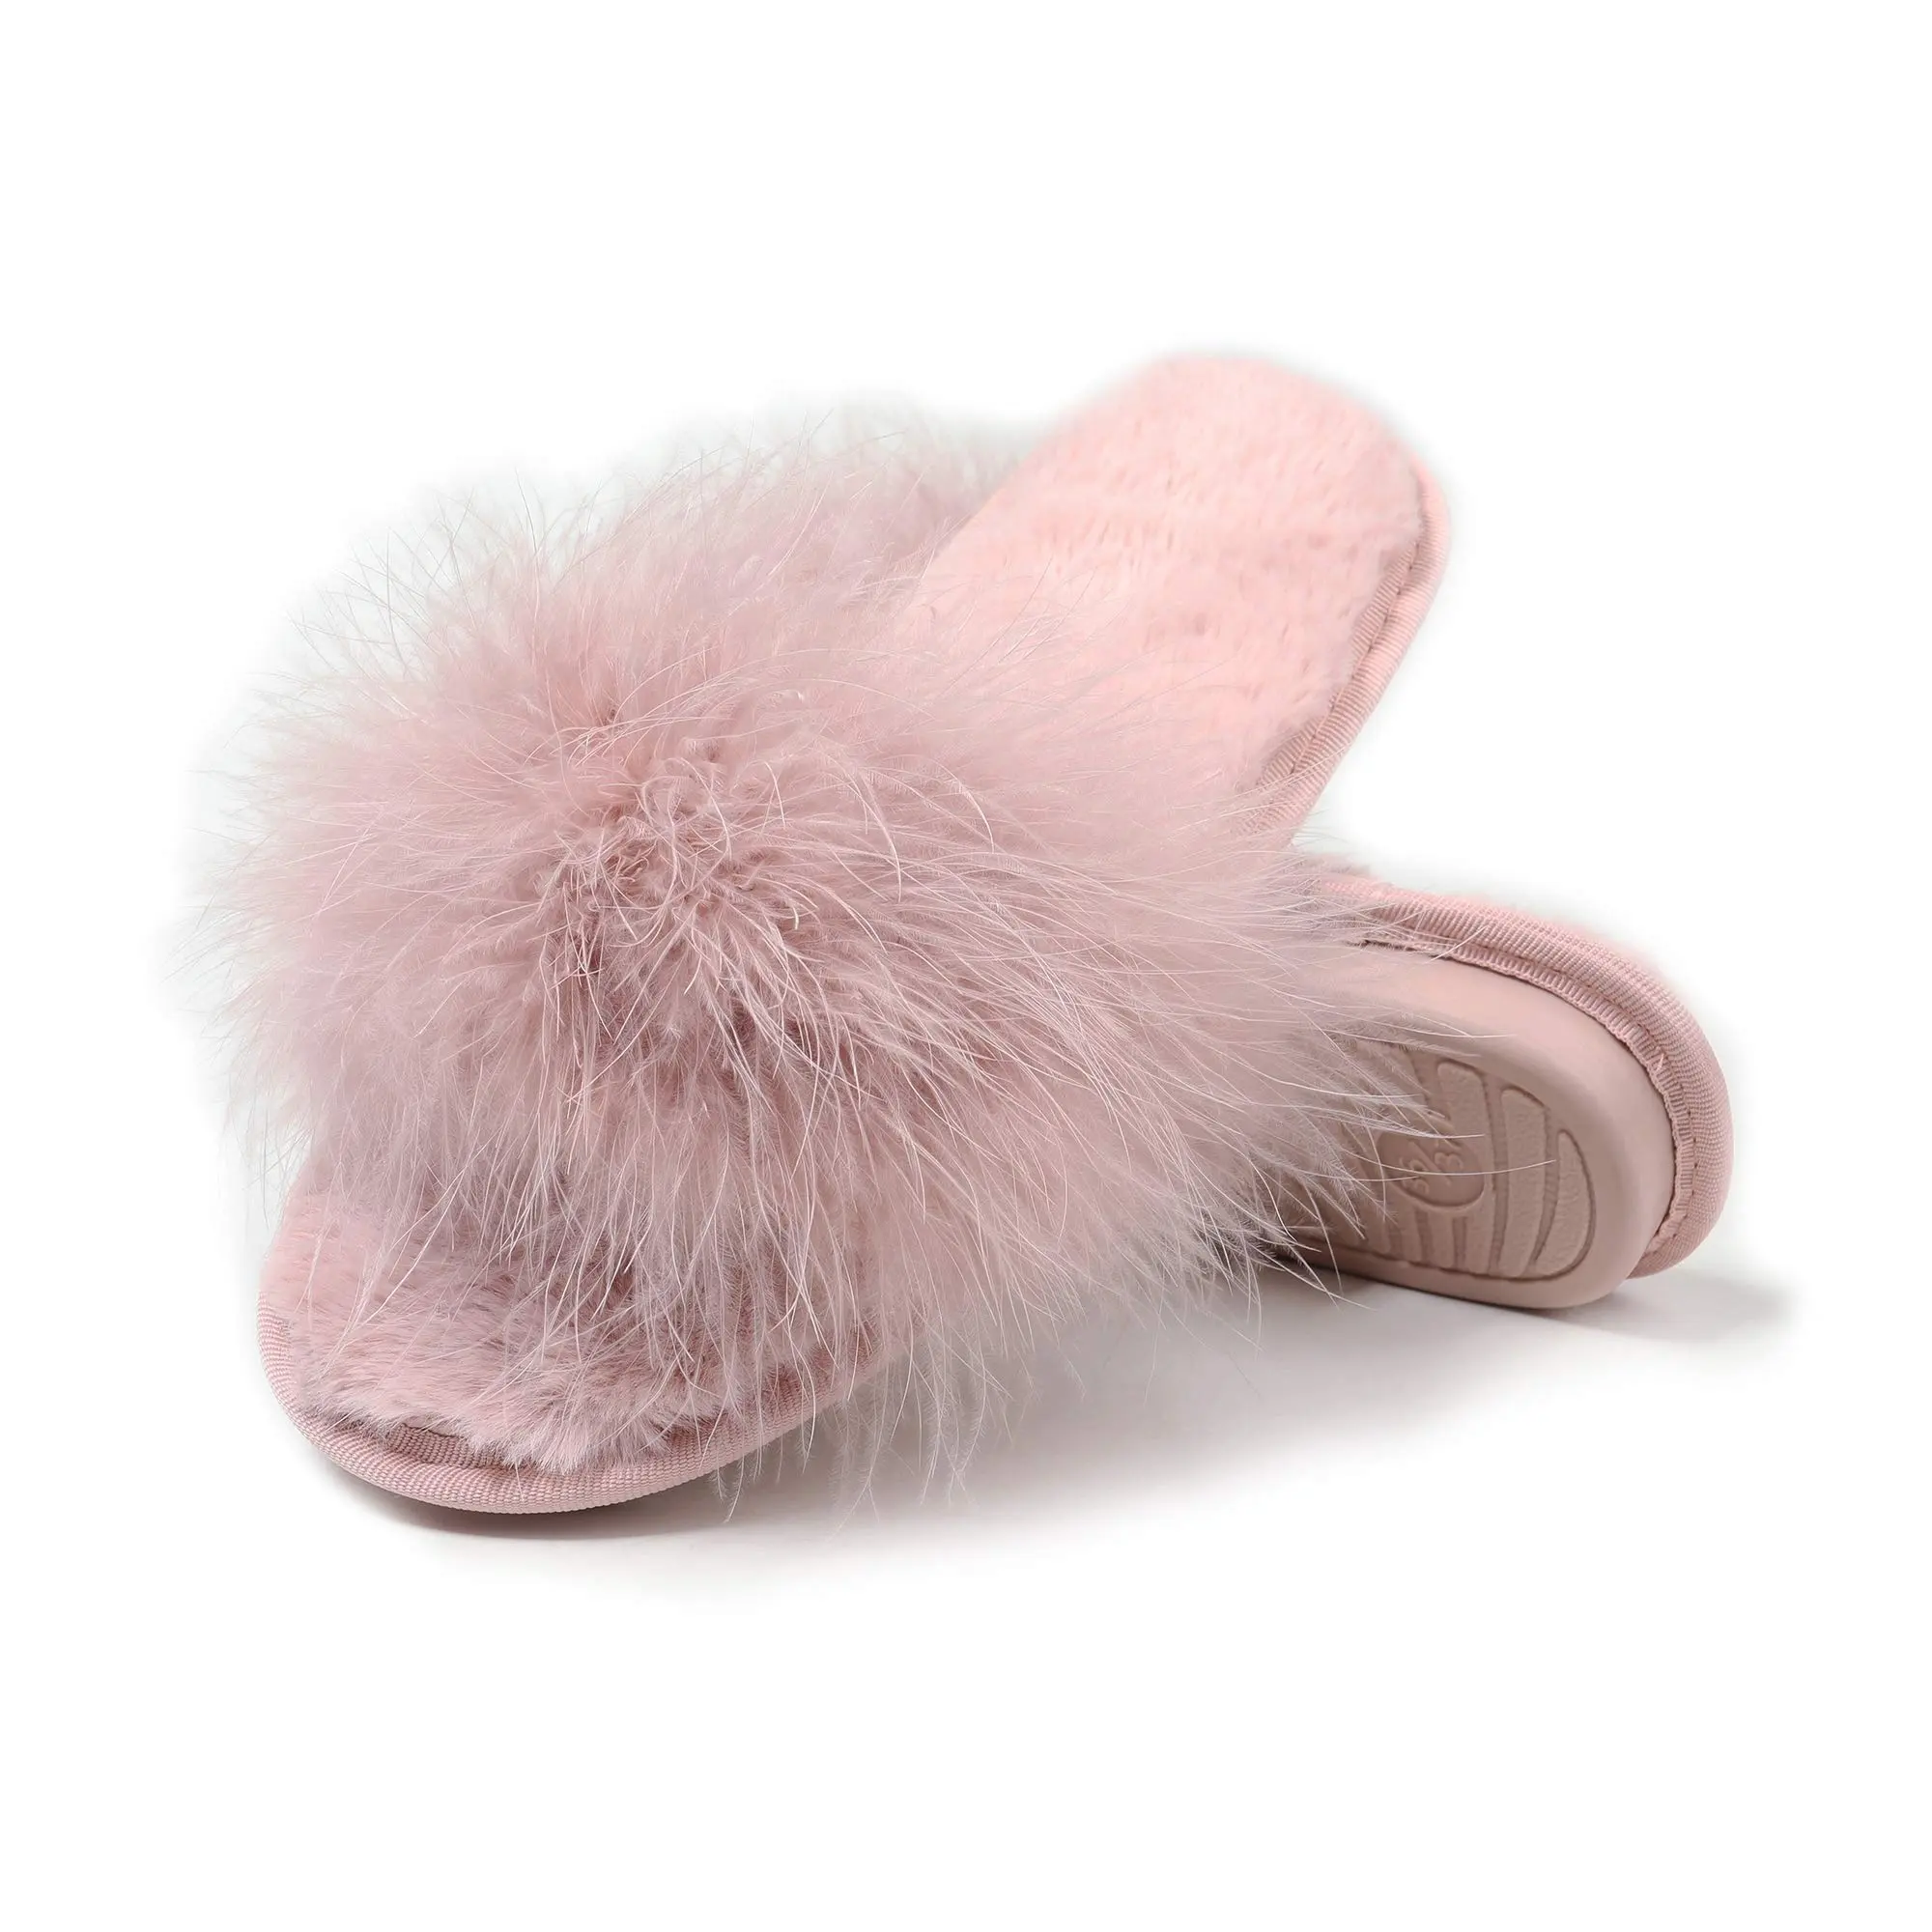 Women's Furry Slippers Slides Open Toe Fuzzy Fashion Fur Slippers Memory Foam Cute Plush House Slippers Indoor